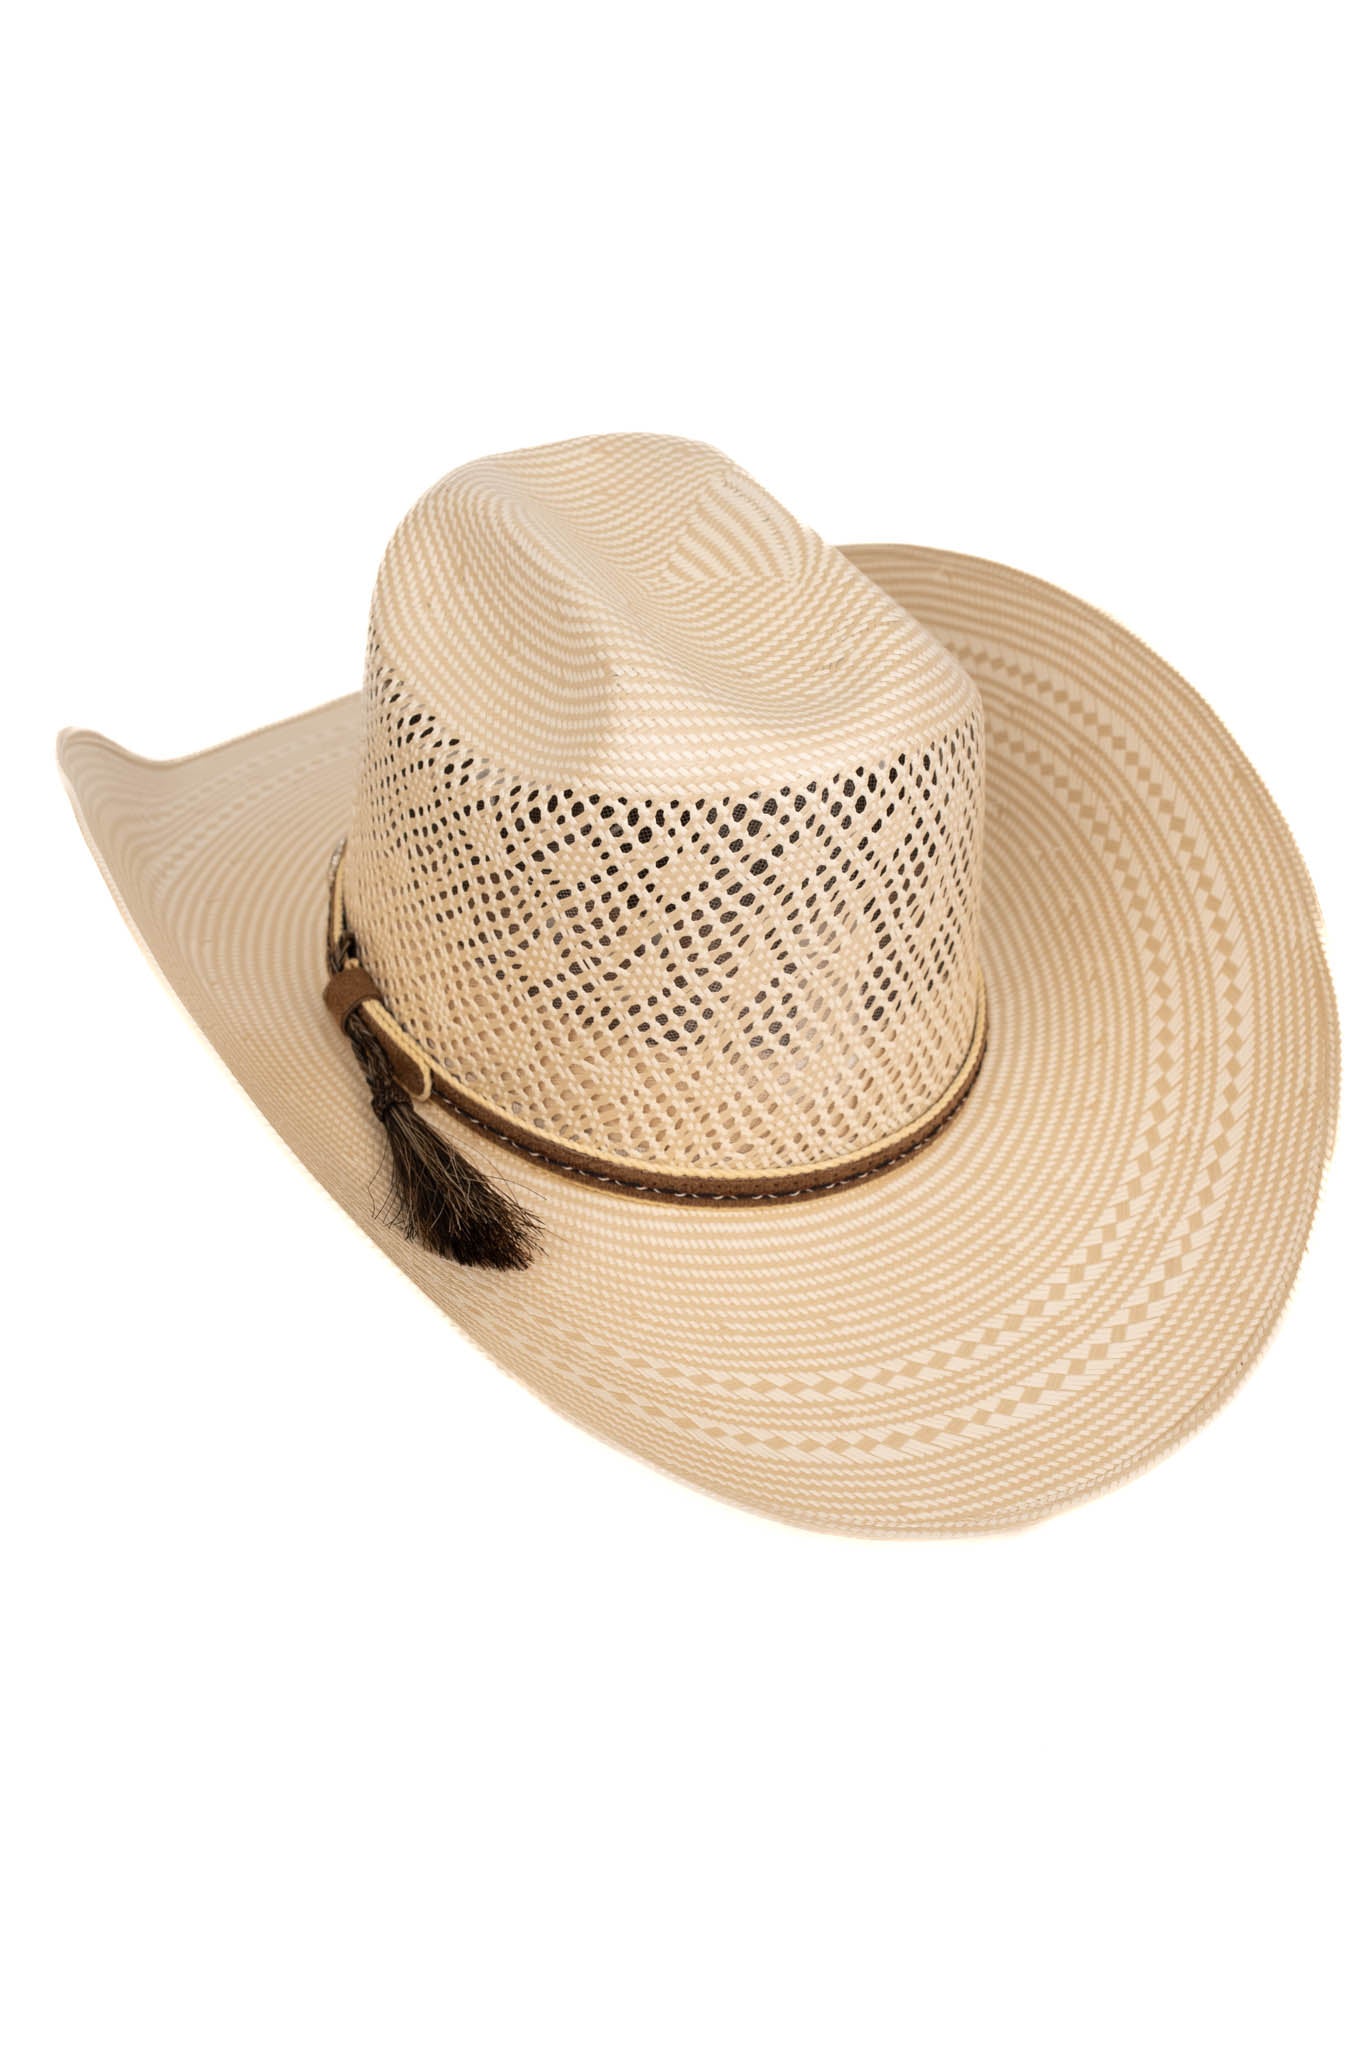 Robert Tassel 100X Limited Edition Straw Hat